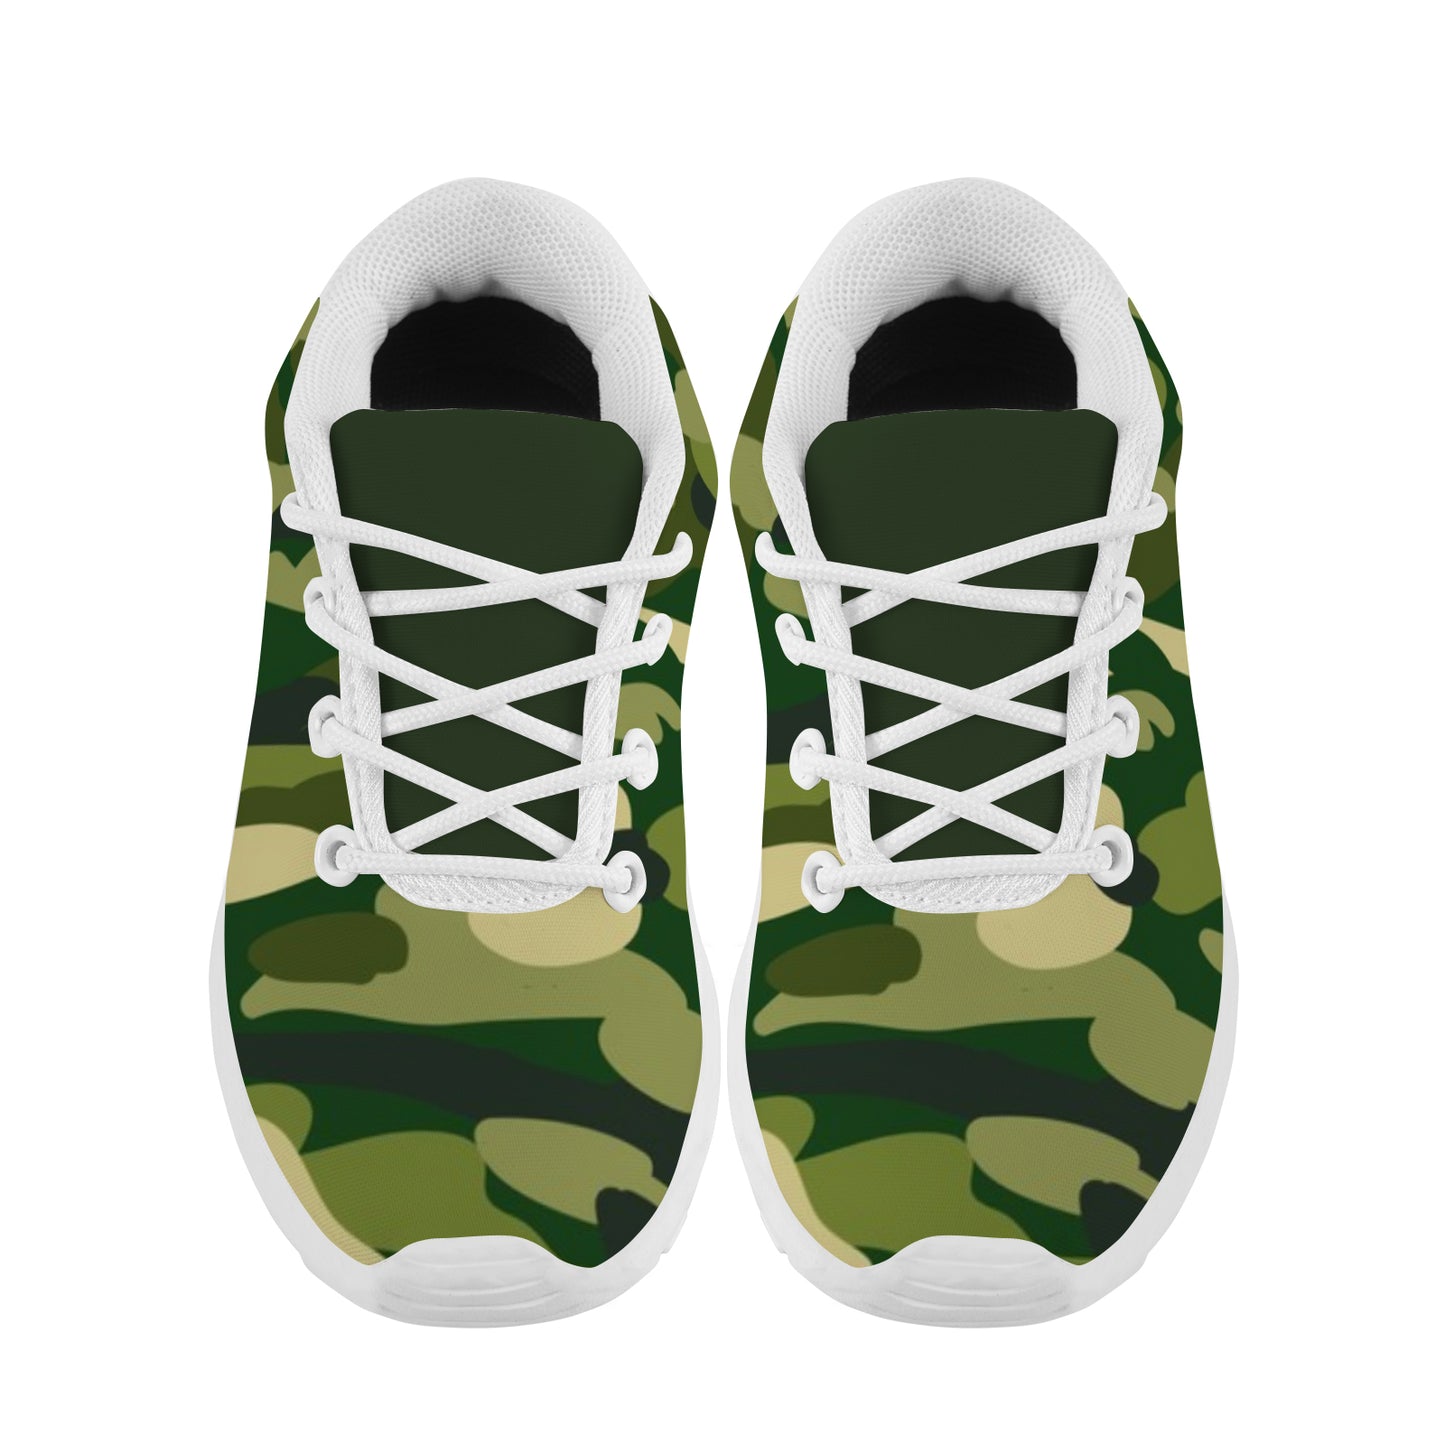 Kid's Sneakers - Green Camoflauge